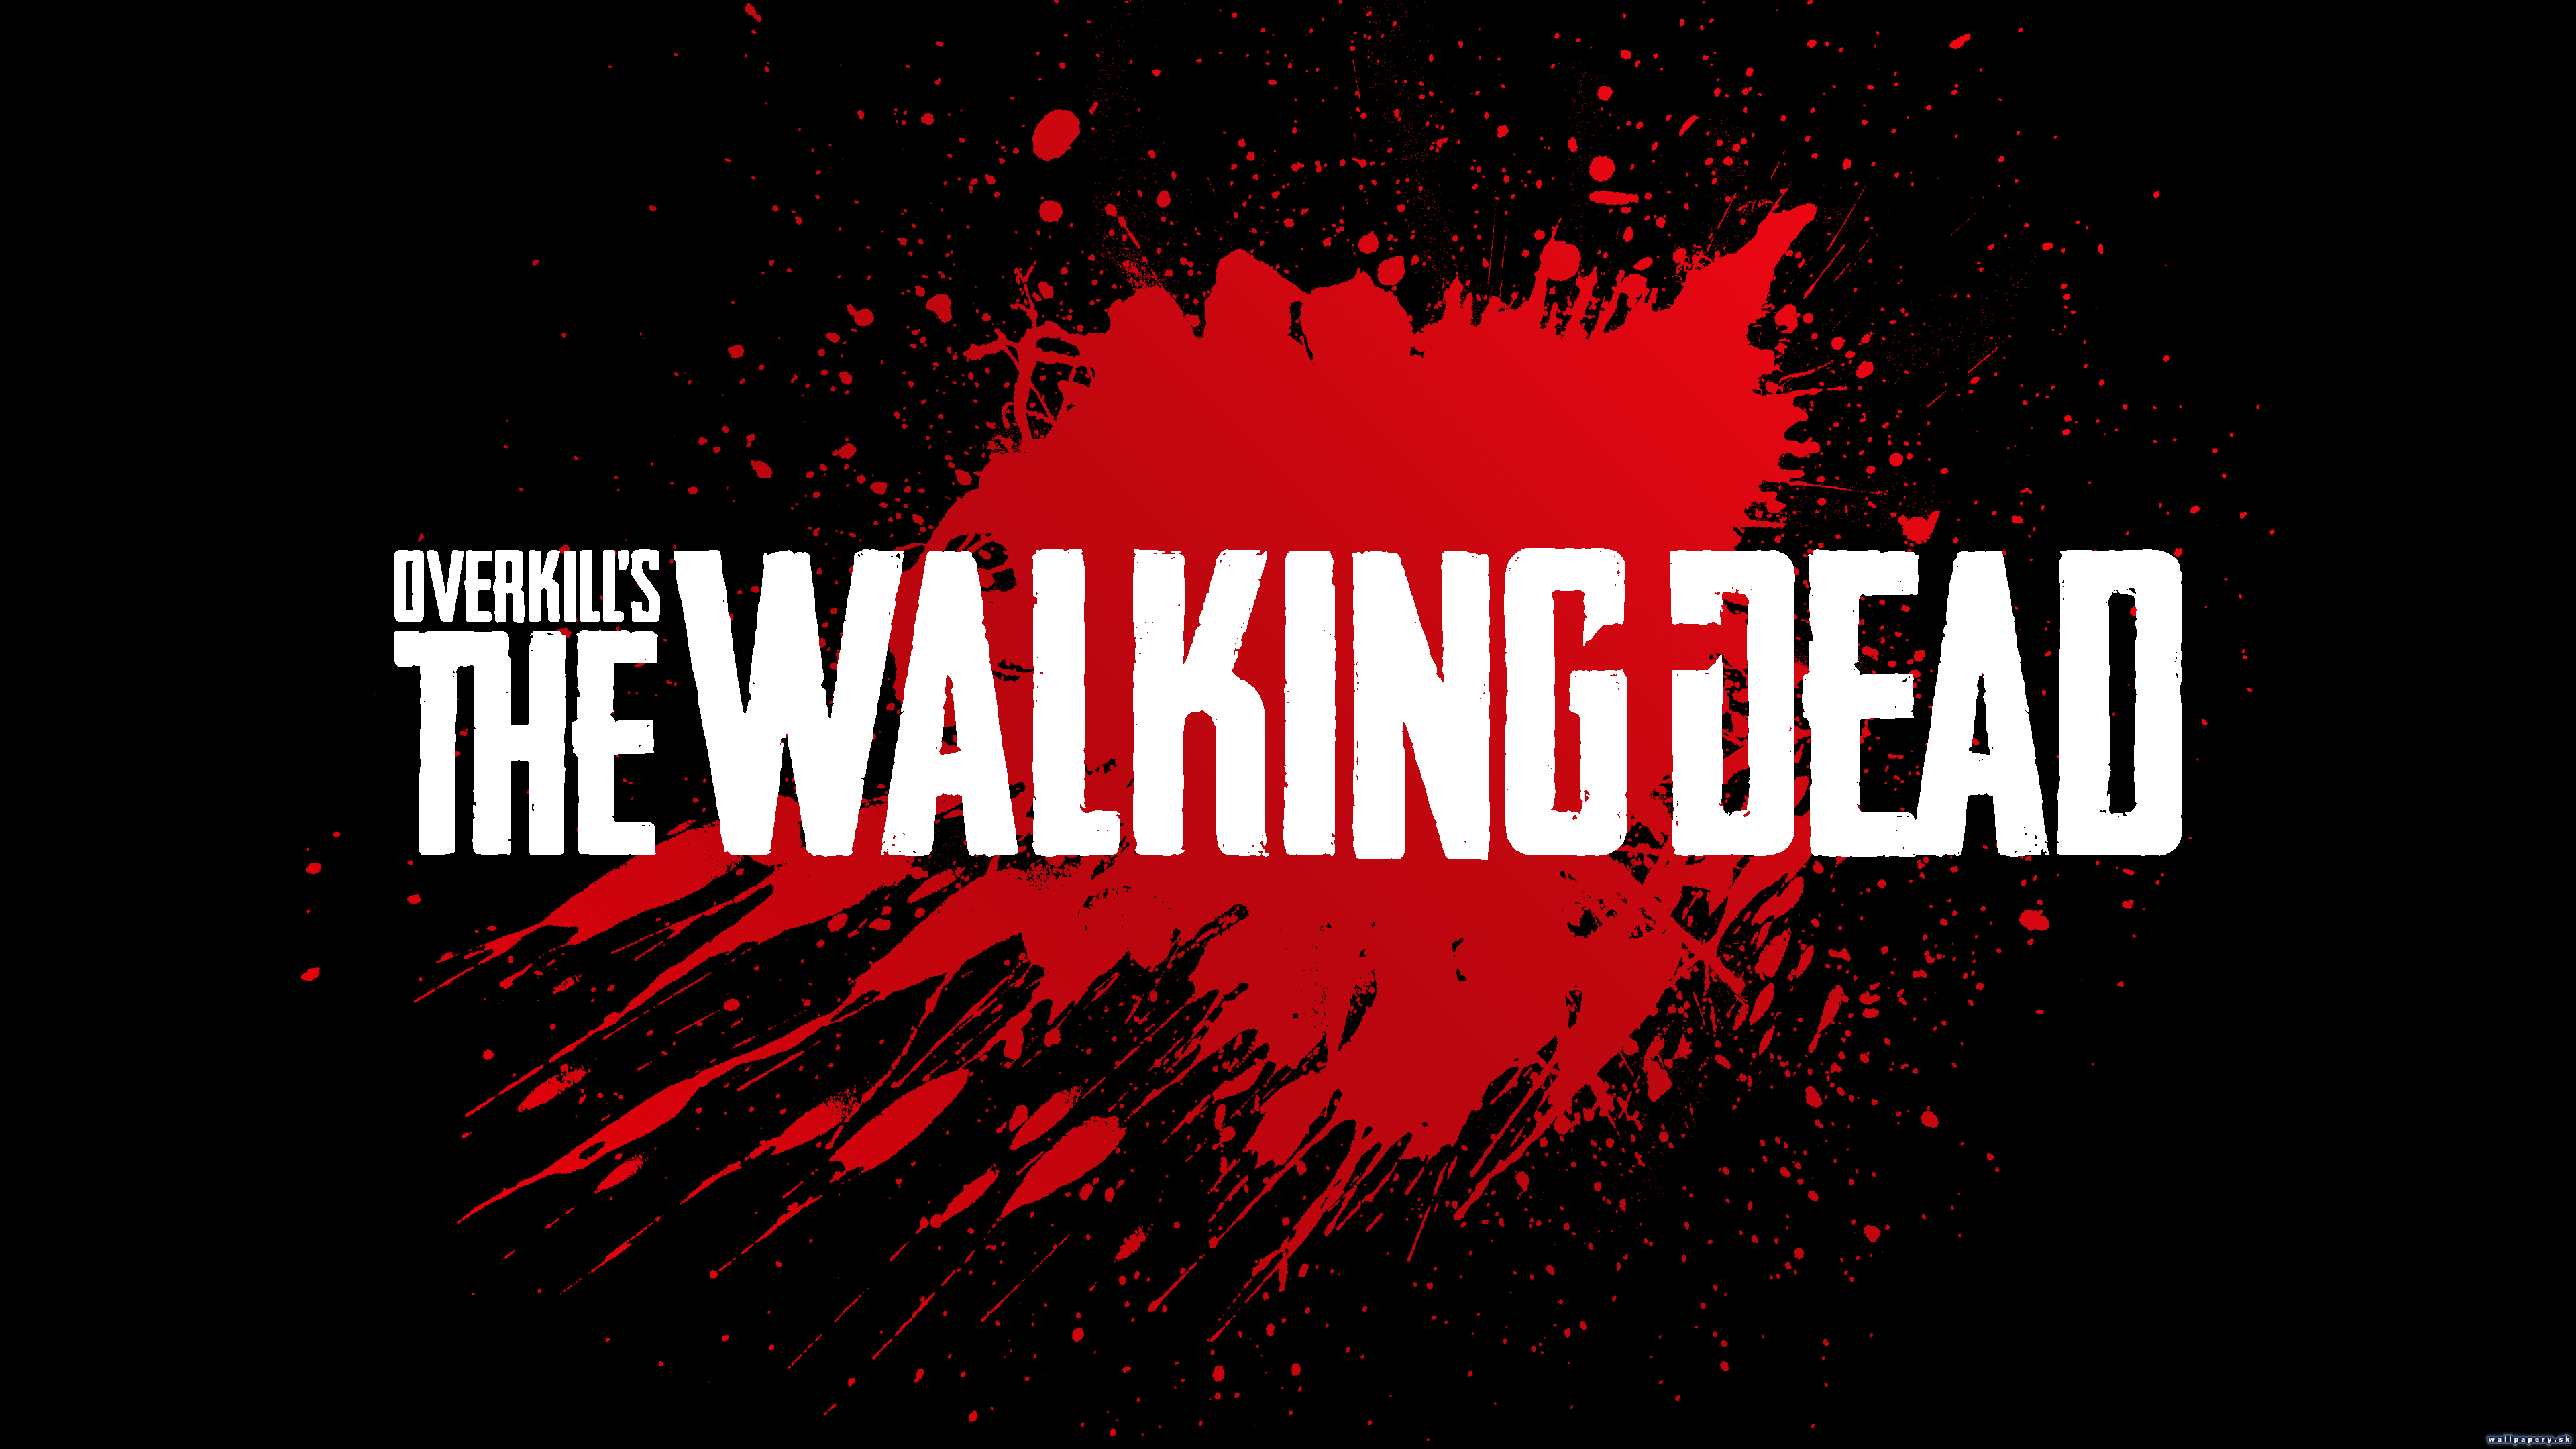 OVERKILL's The Walking Dead - wallpaper 3